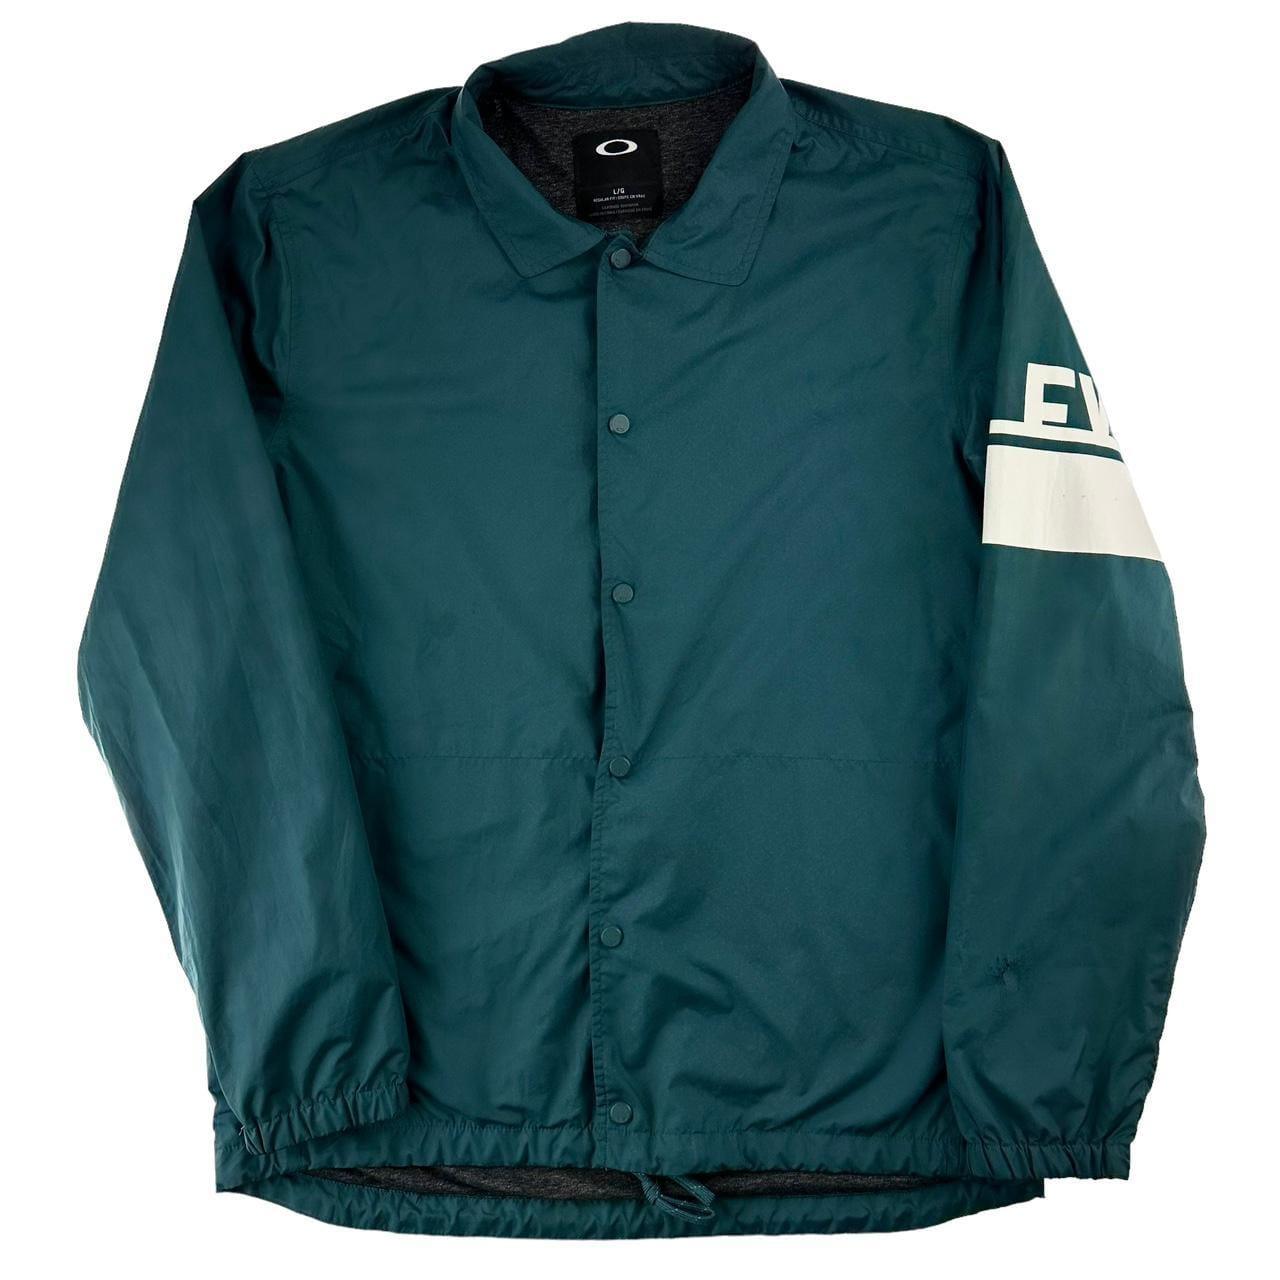 Oakley logo coach jacket size XL - Known Source